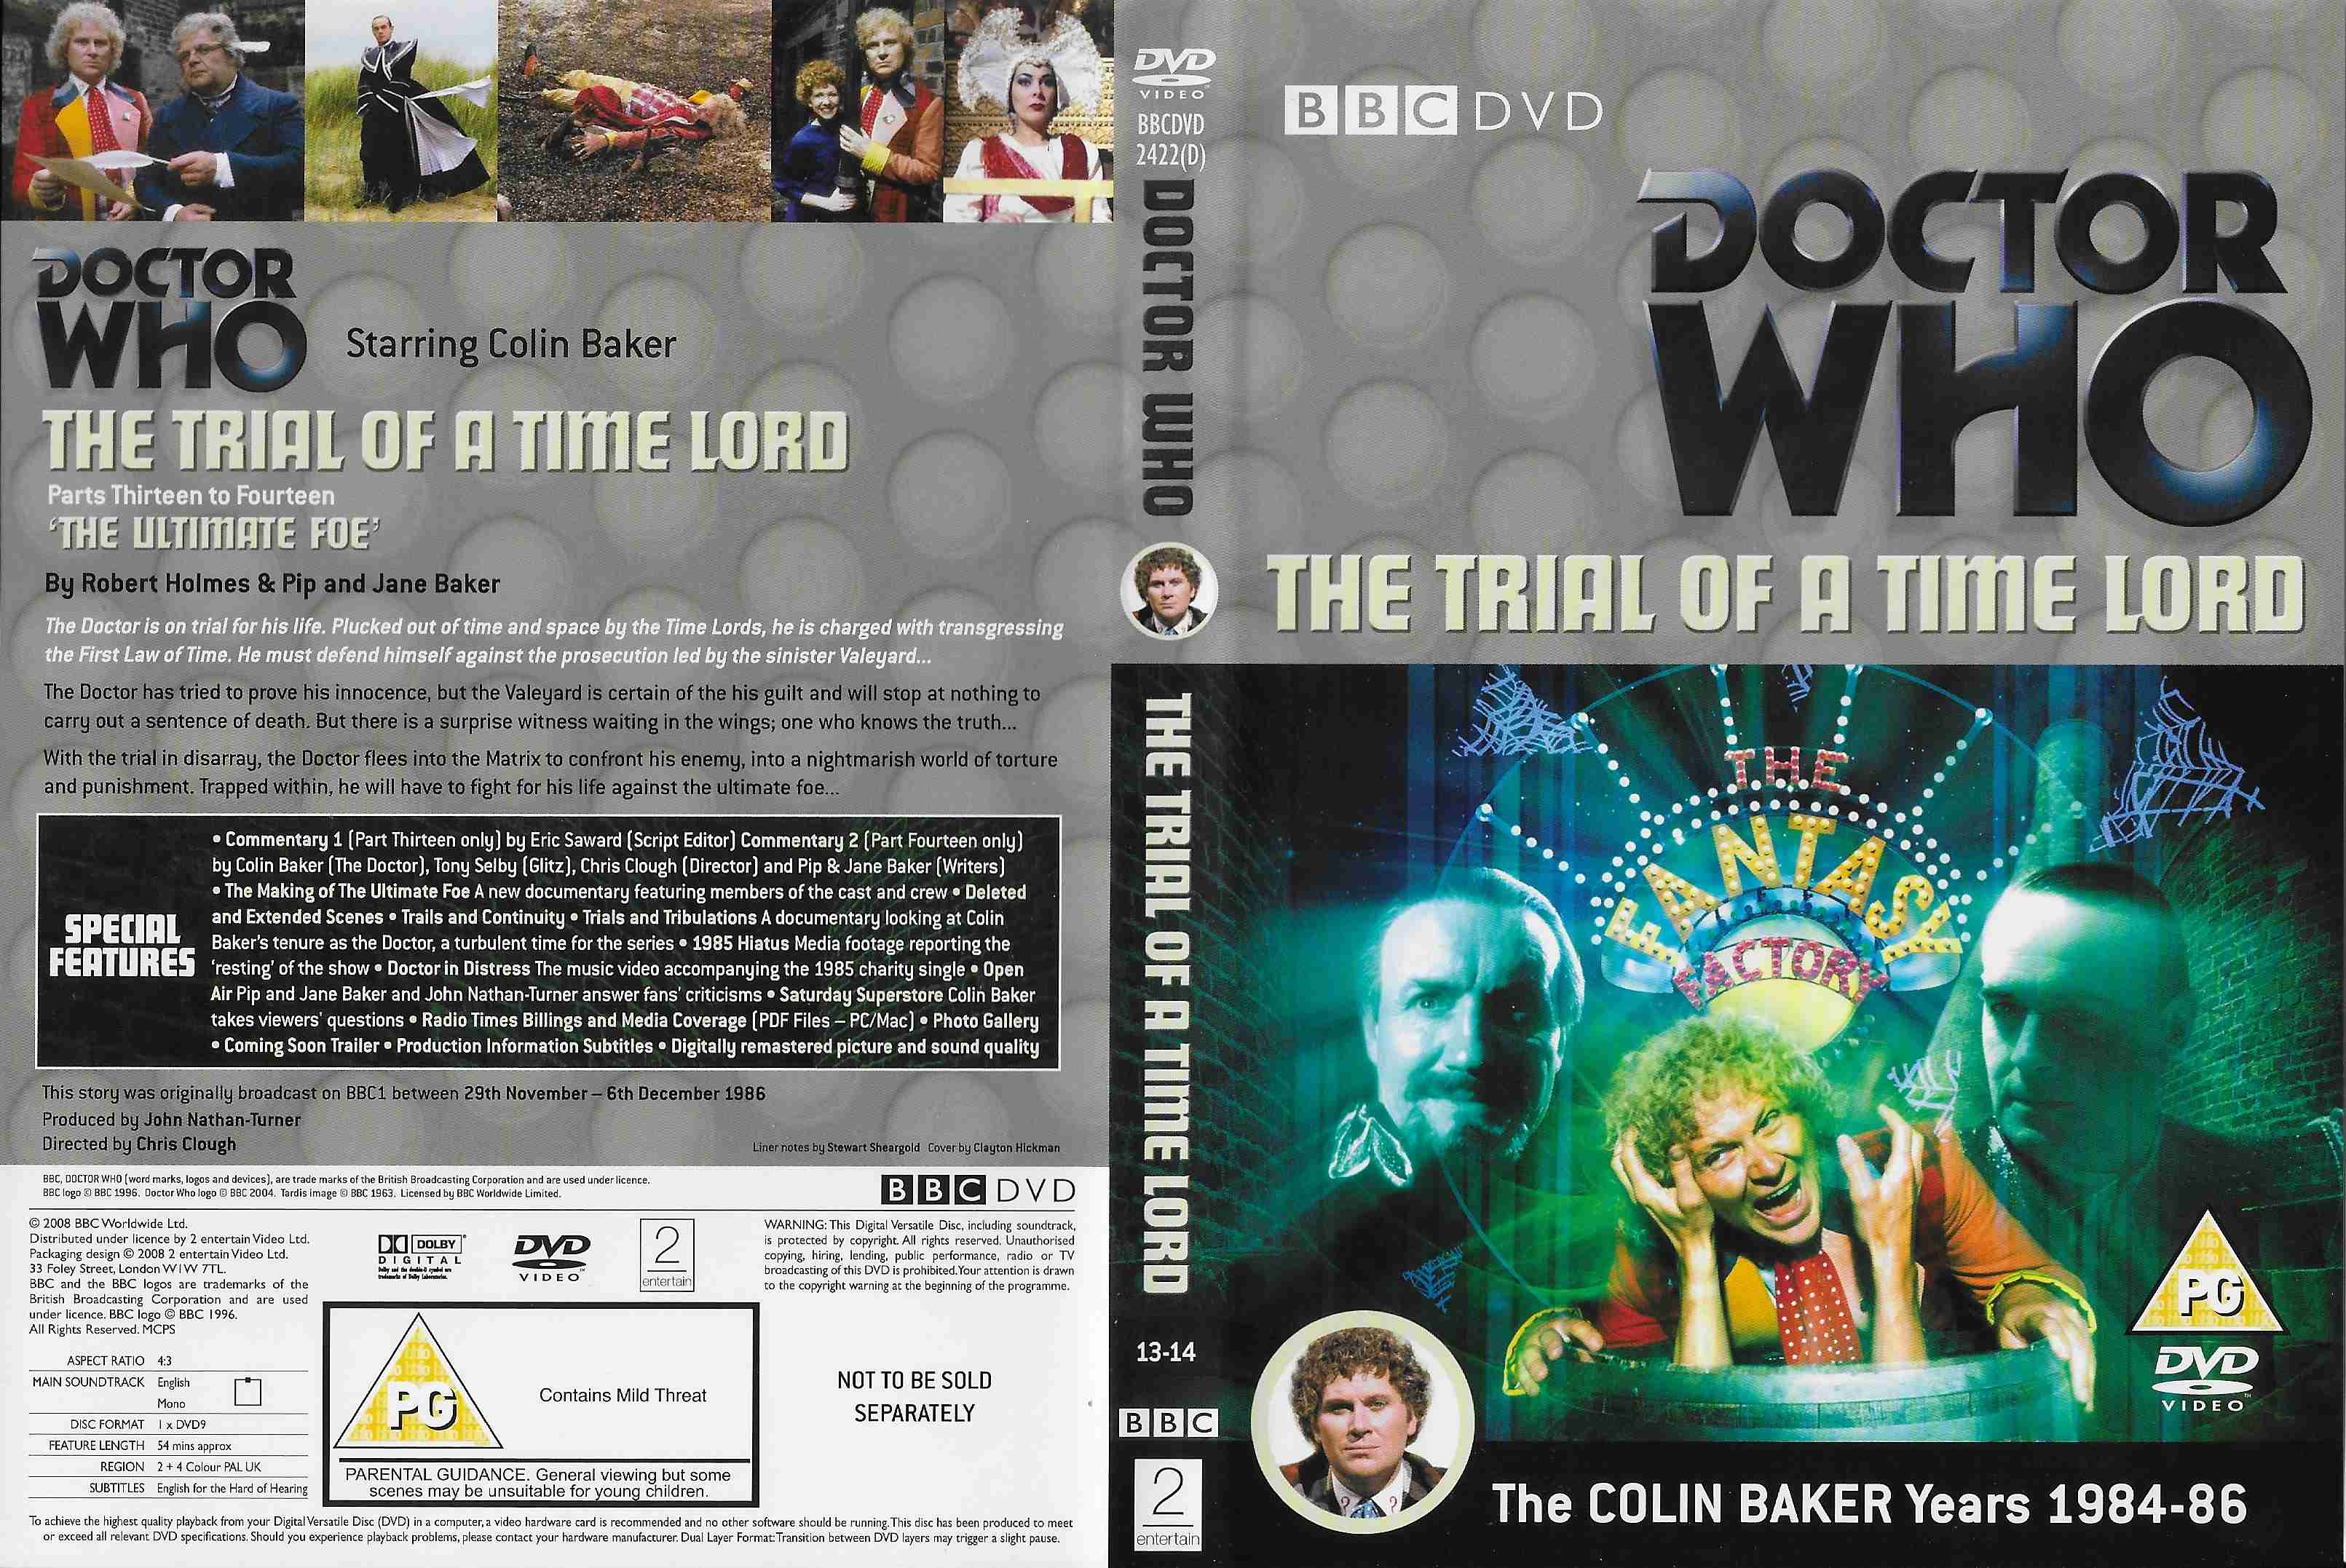 Back cover of BBCDVD 2422D